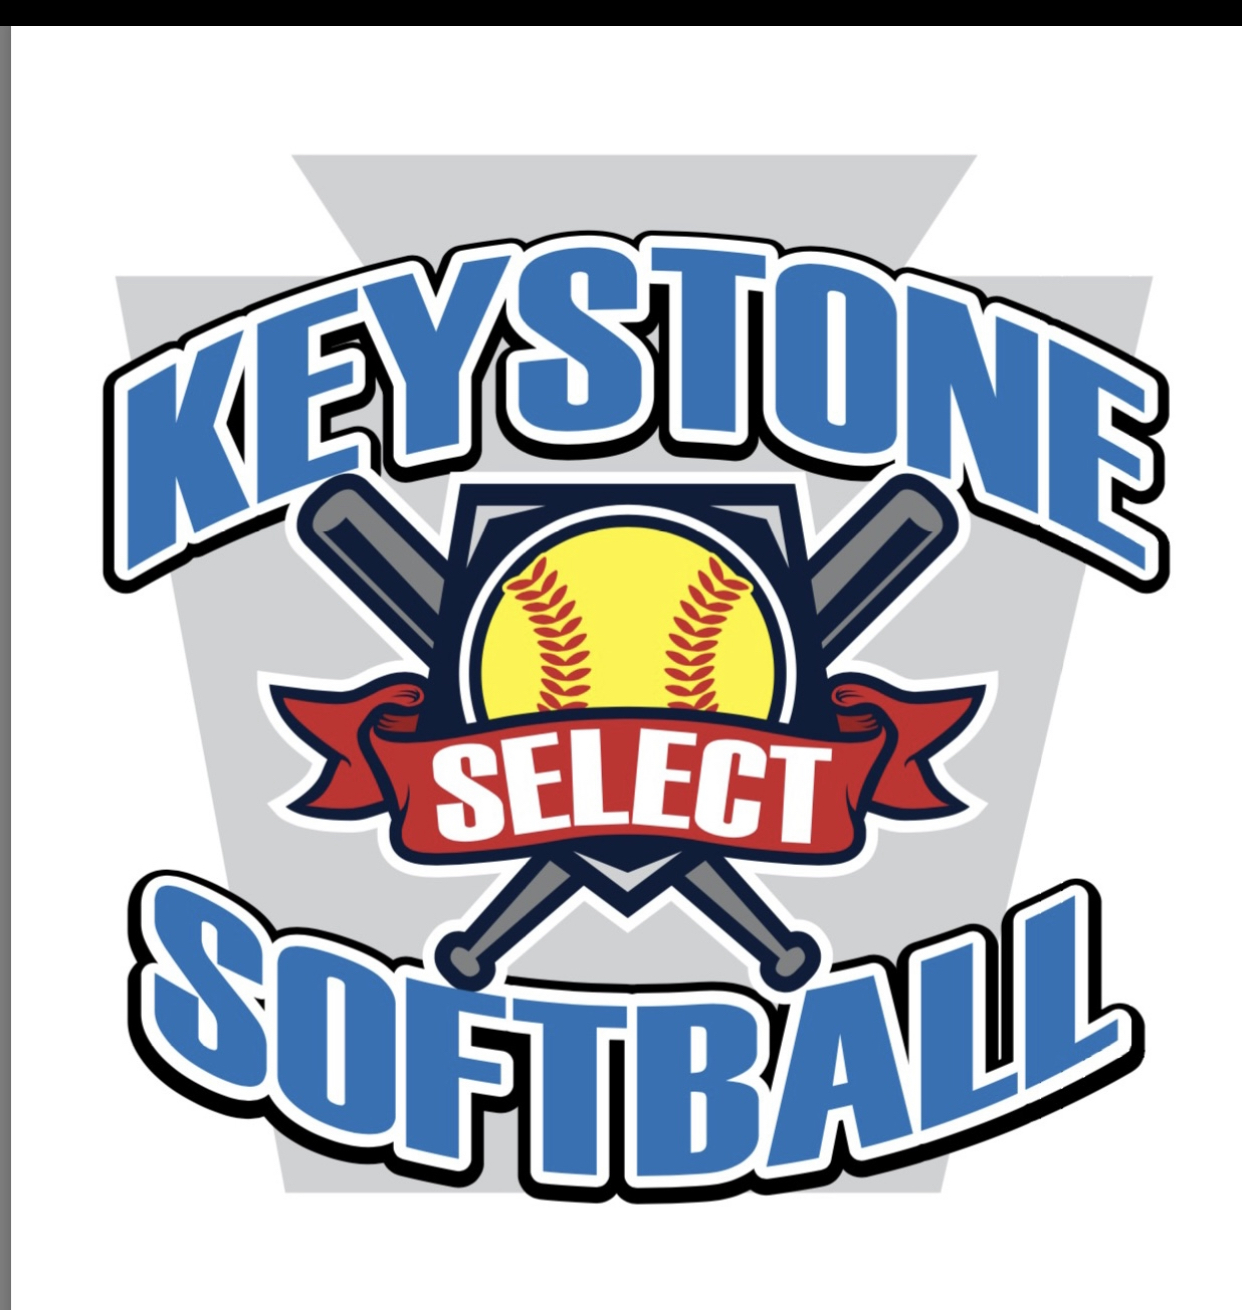 Keystone Select Softball Billtown Brawl Logo